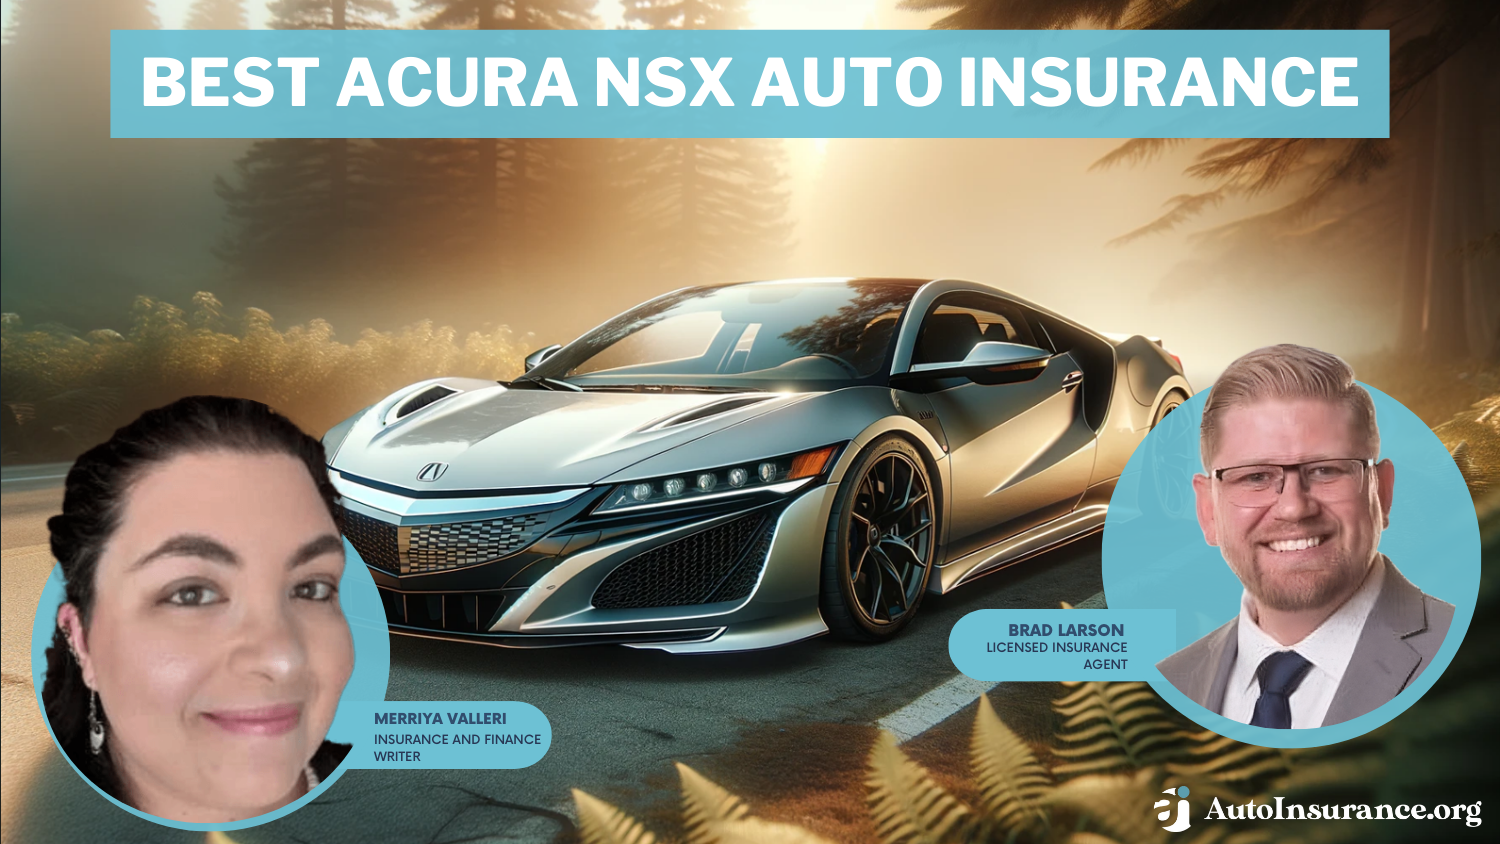 Best Acura NSX Auto Insurance: State Farm, Progressive, and Geico